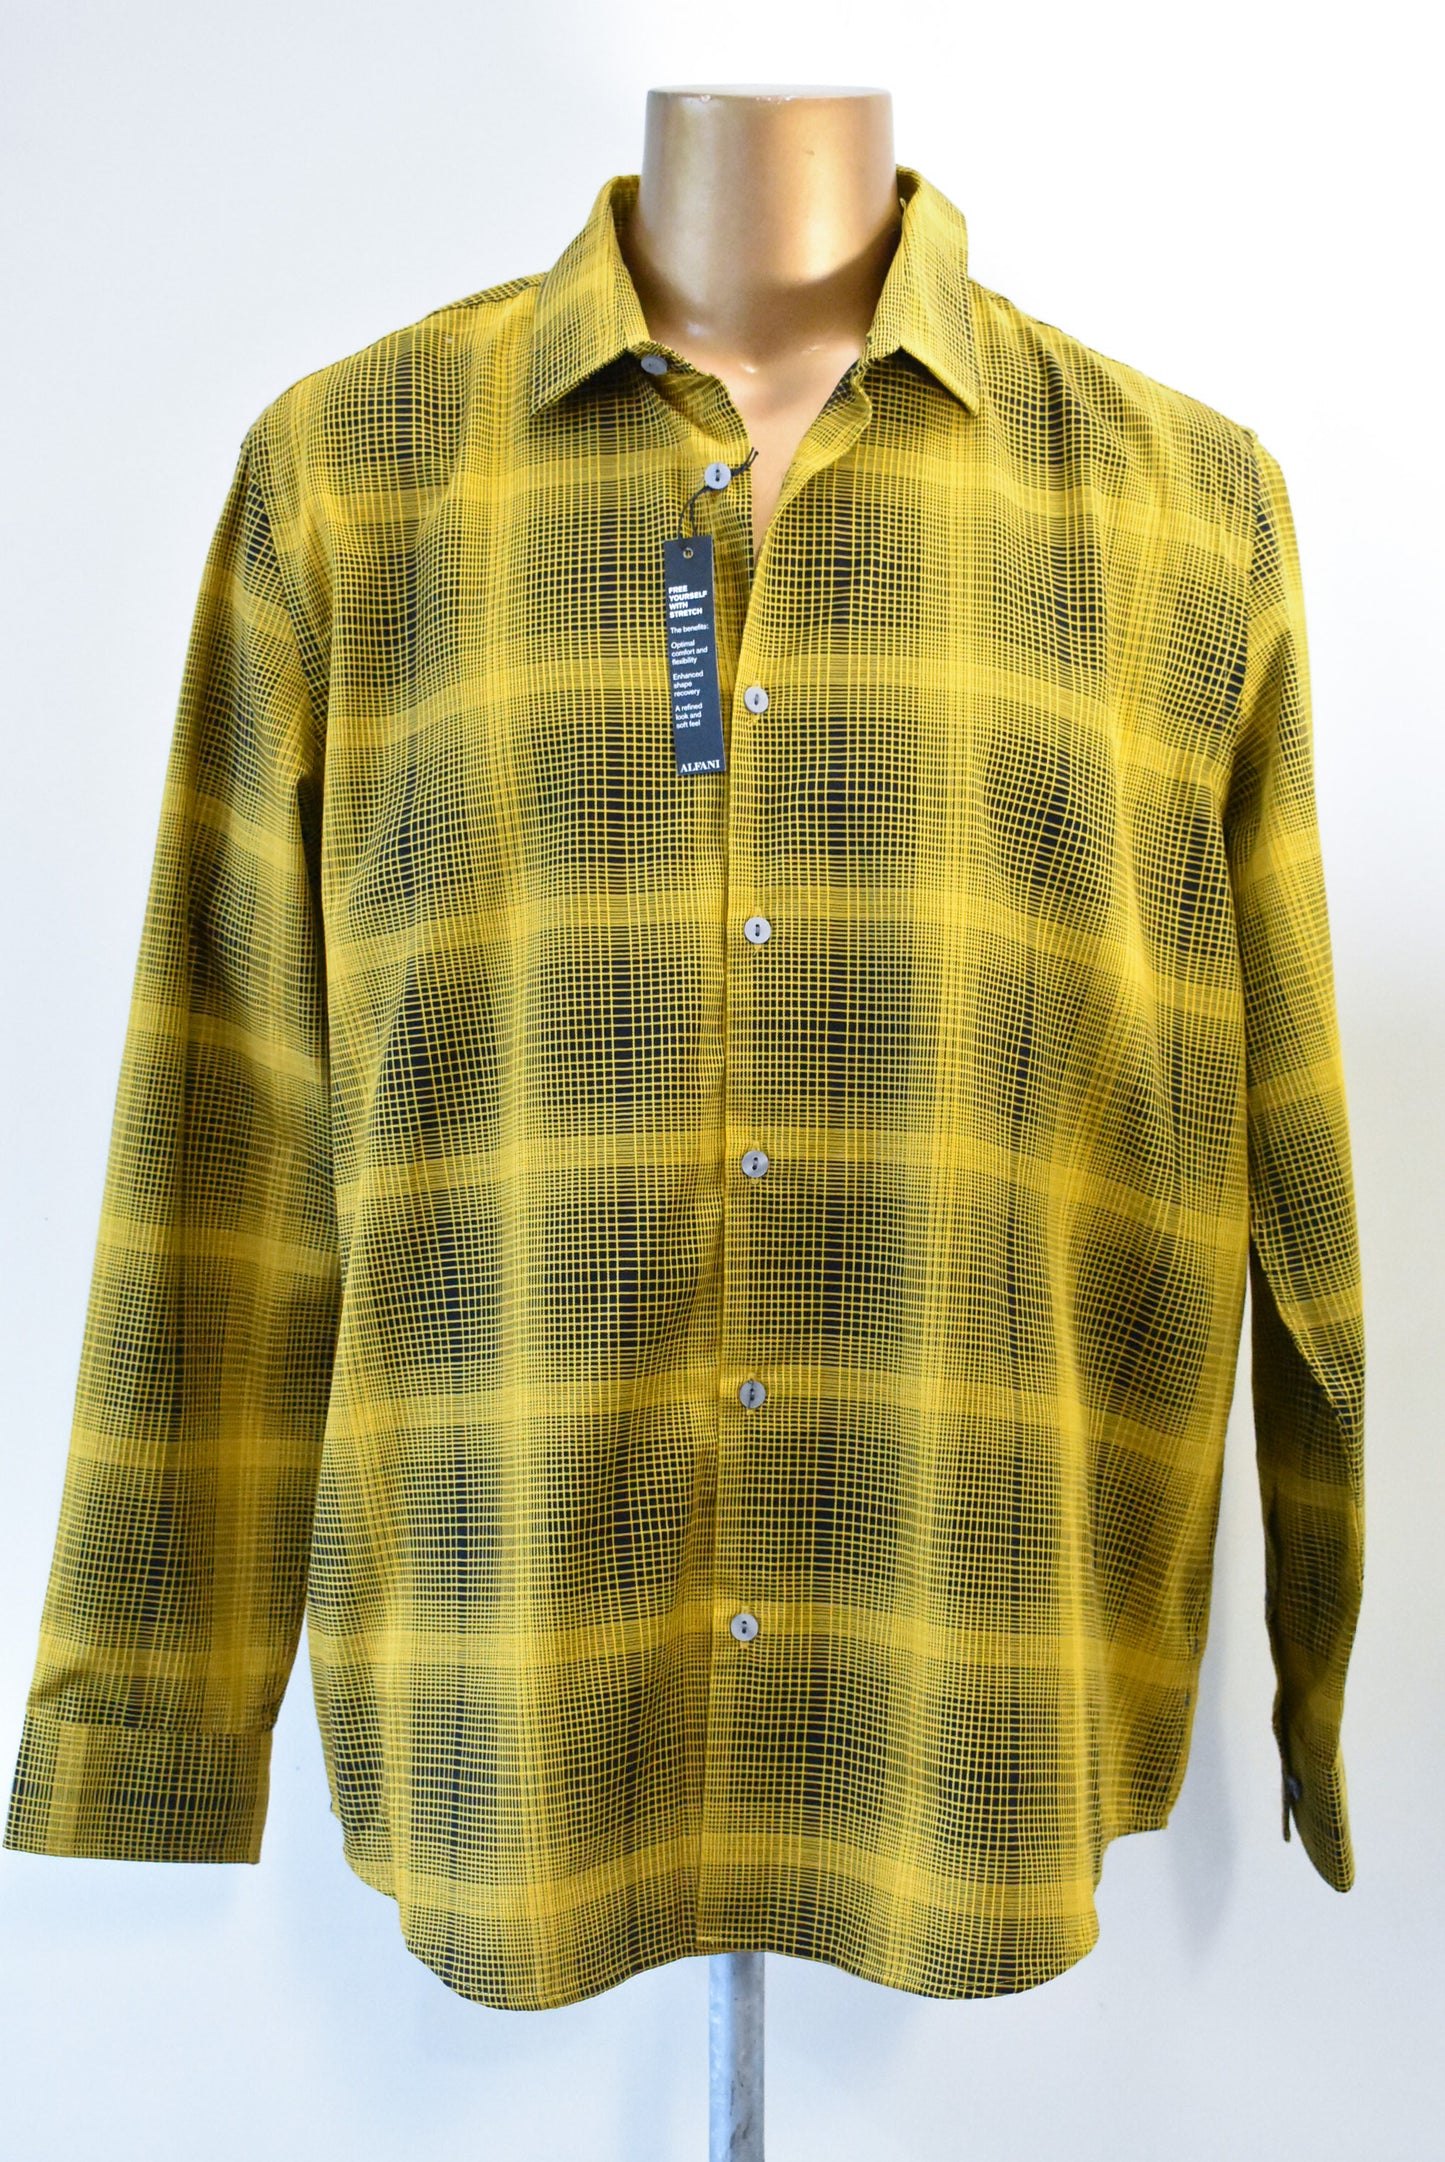 Alfani long sleeve black and marigold yellow plaid shirt, XL